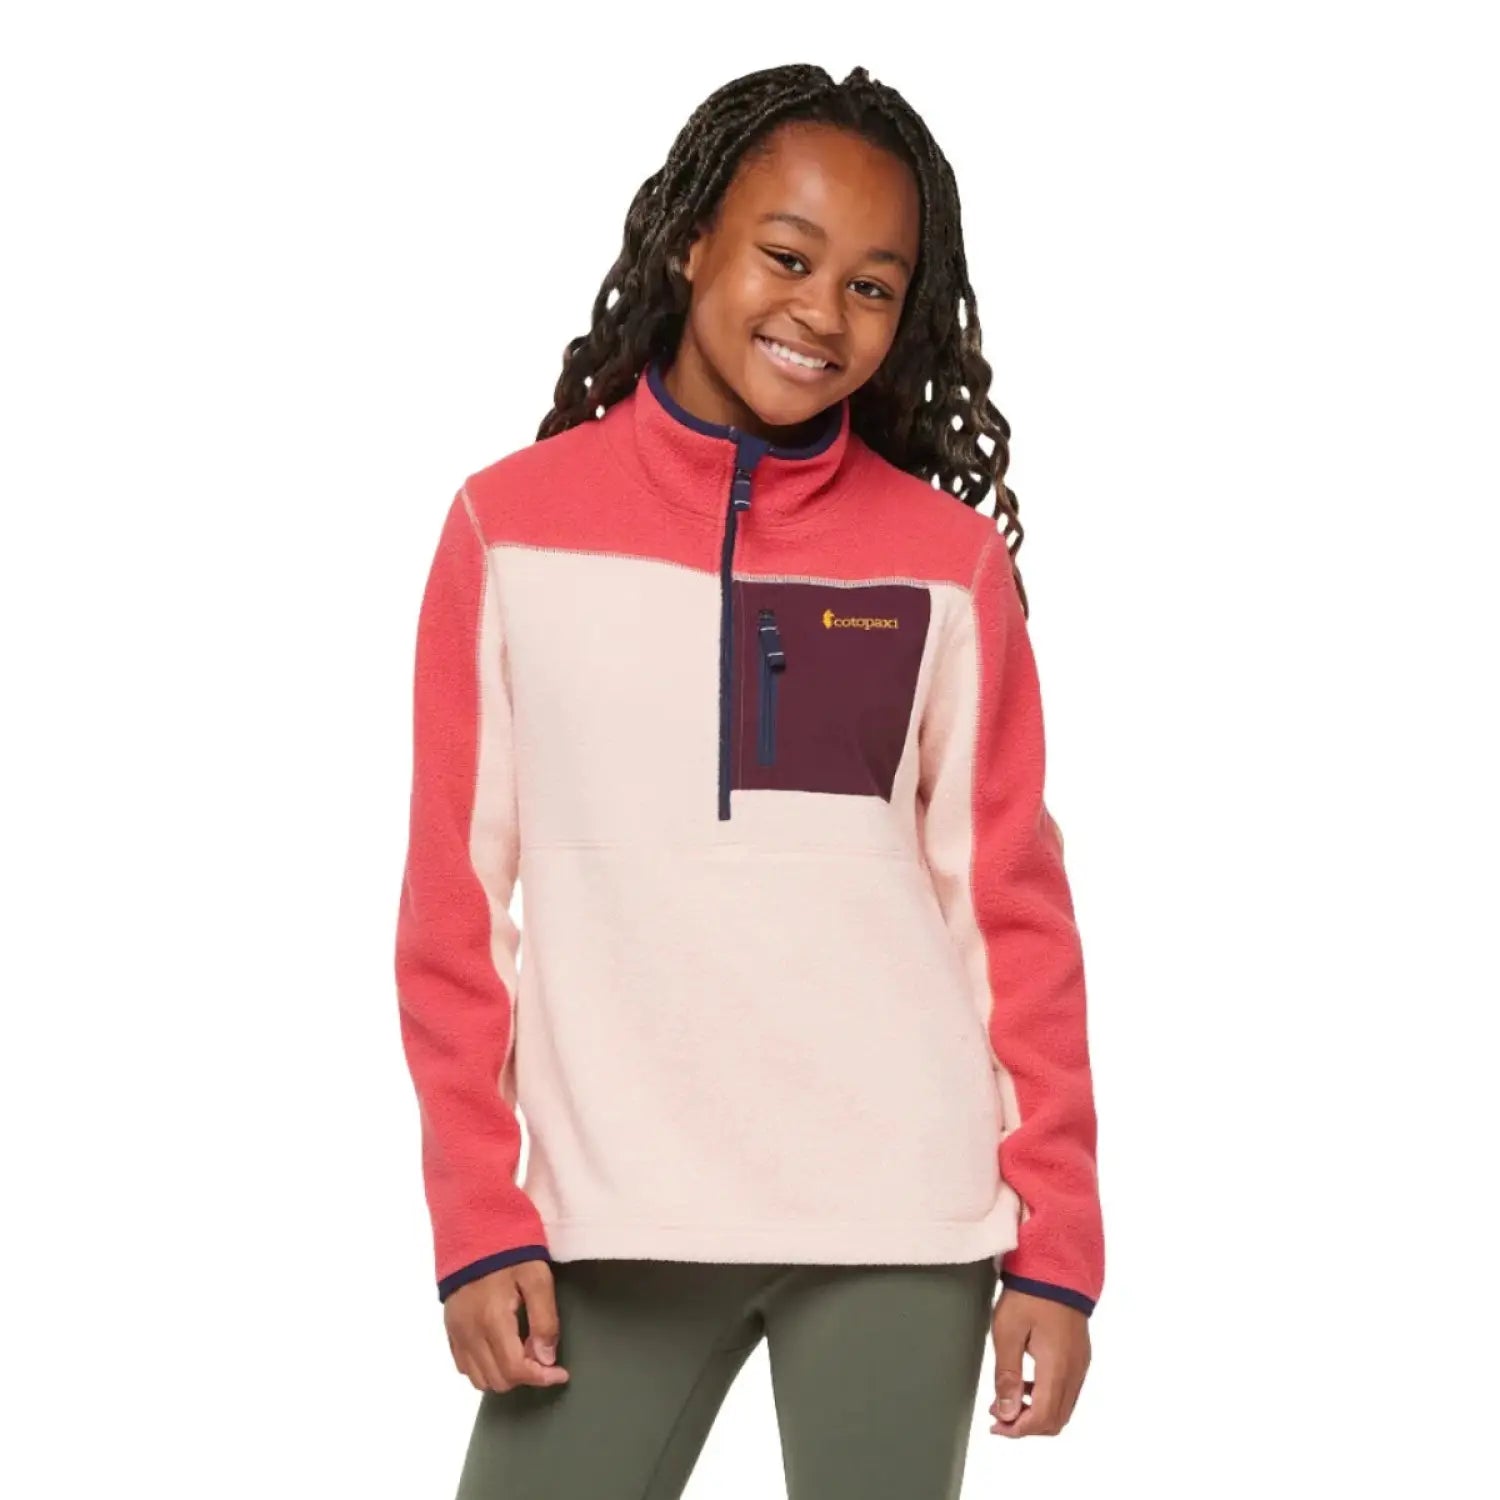 Cotopaxi K's Abrazo Half-Zip Fleece Jacket, Strawberry Rosewood, front view on model 